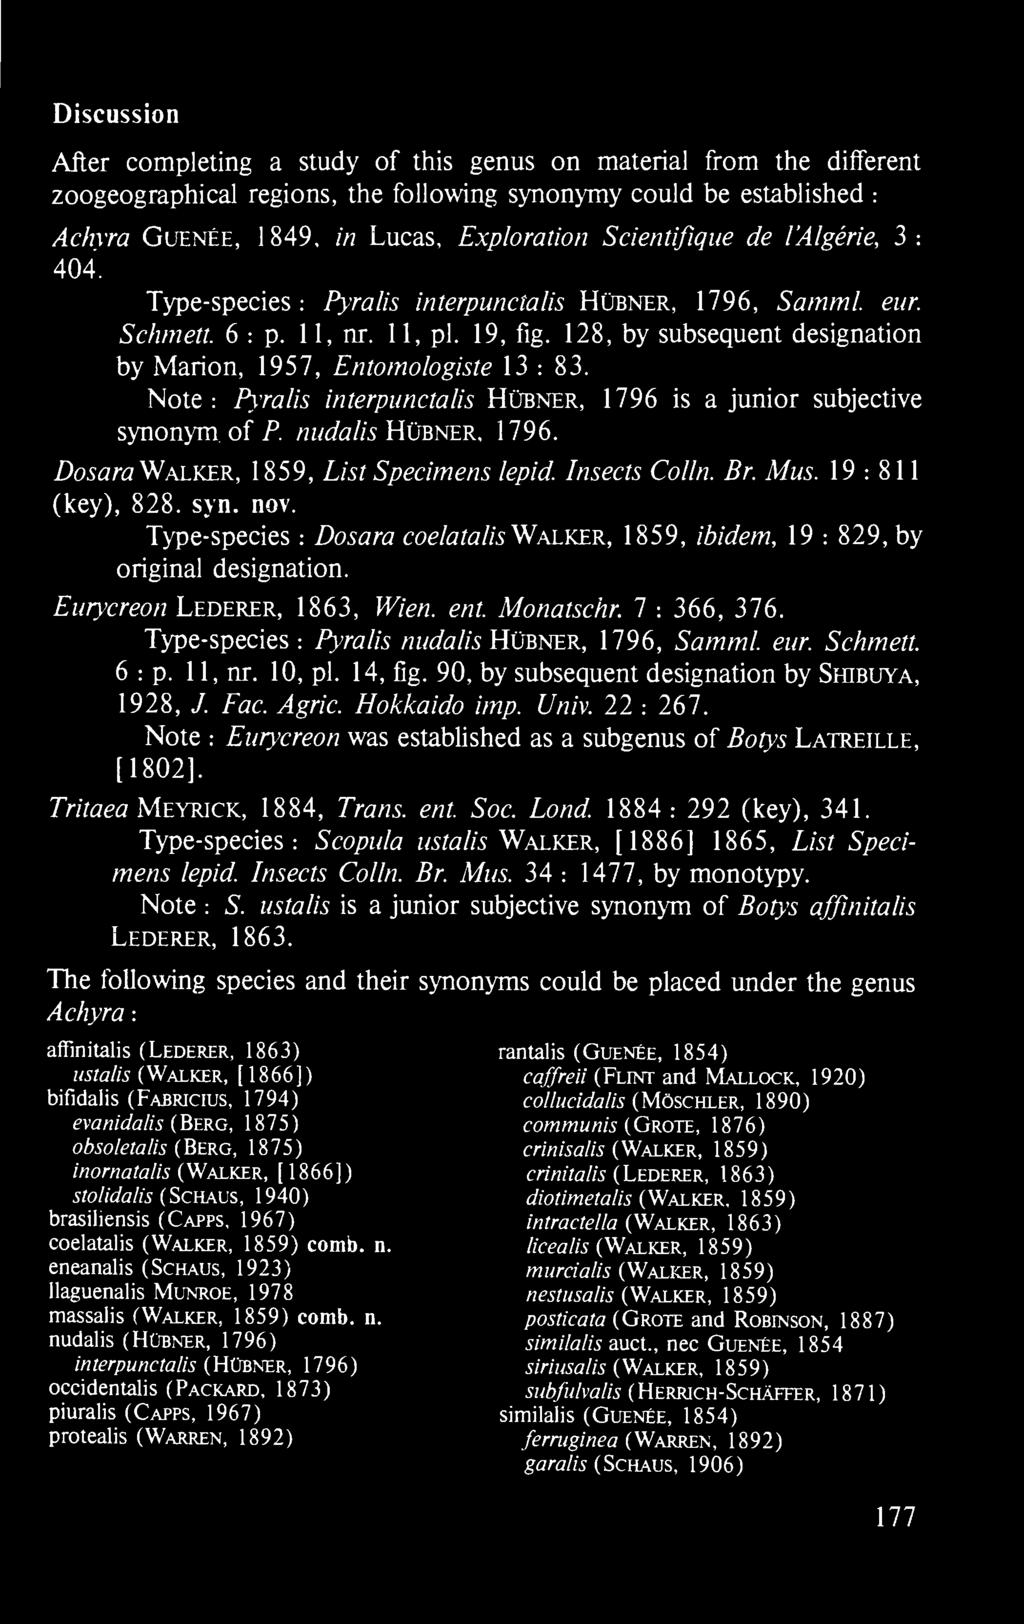 Scientifique de l'algérie, 3 : 404. Type-species : Pyralis interpunclalis Hübner, 1796, Samml. eur. Schmett. 6 : p. 11, nr. 11, pi. 19, fig.